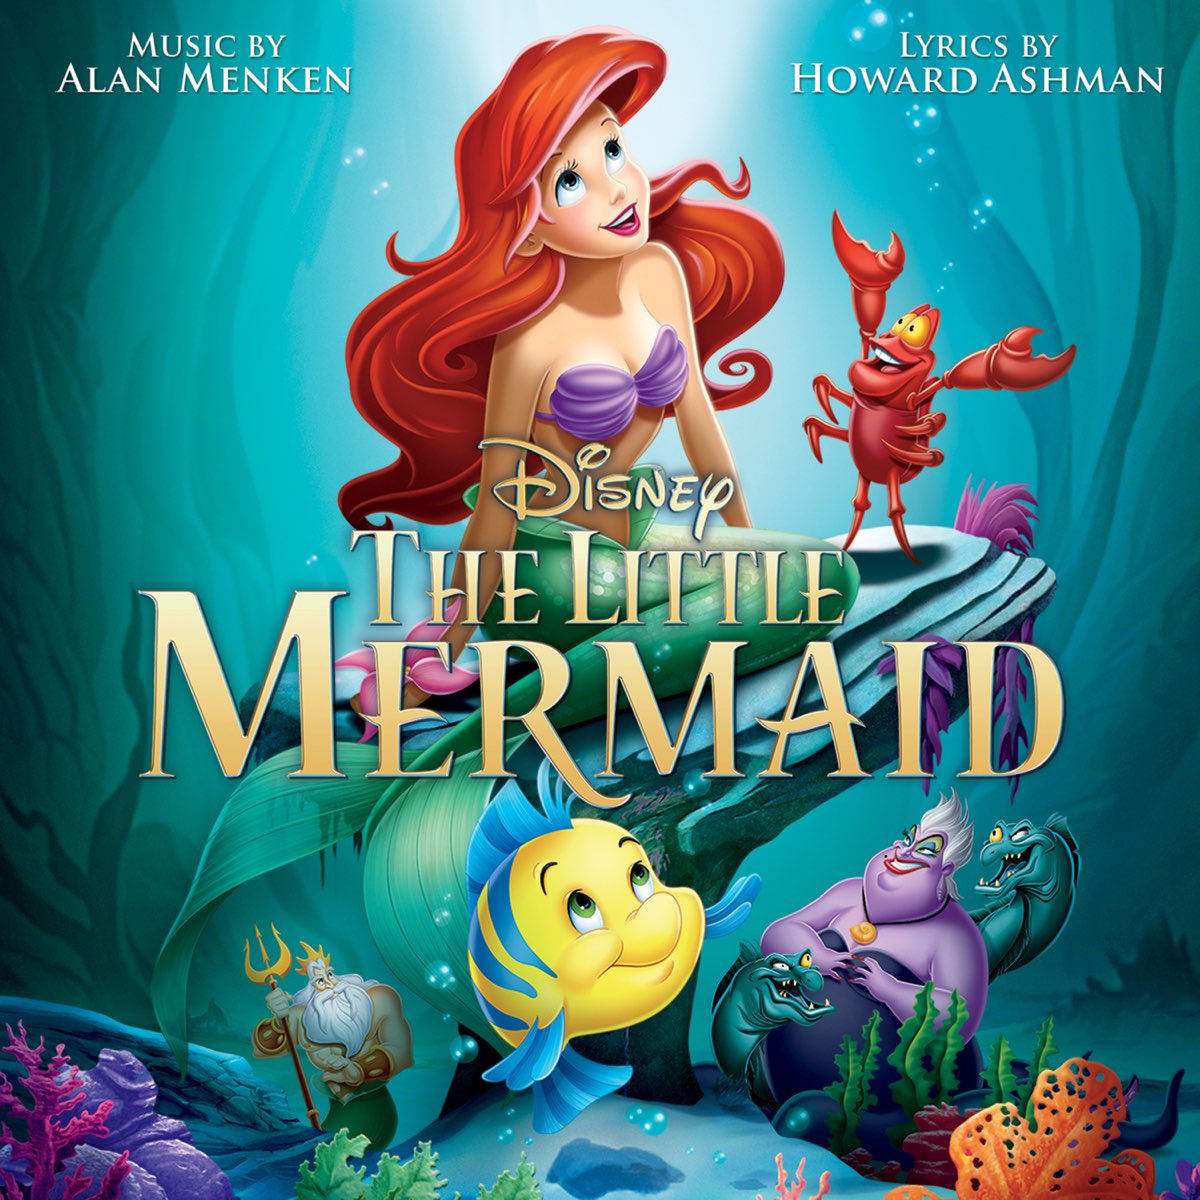 ‎The Little Mermaid (Original Motion Picture Soundtrack) Album by